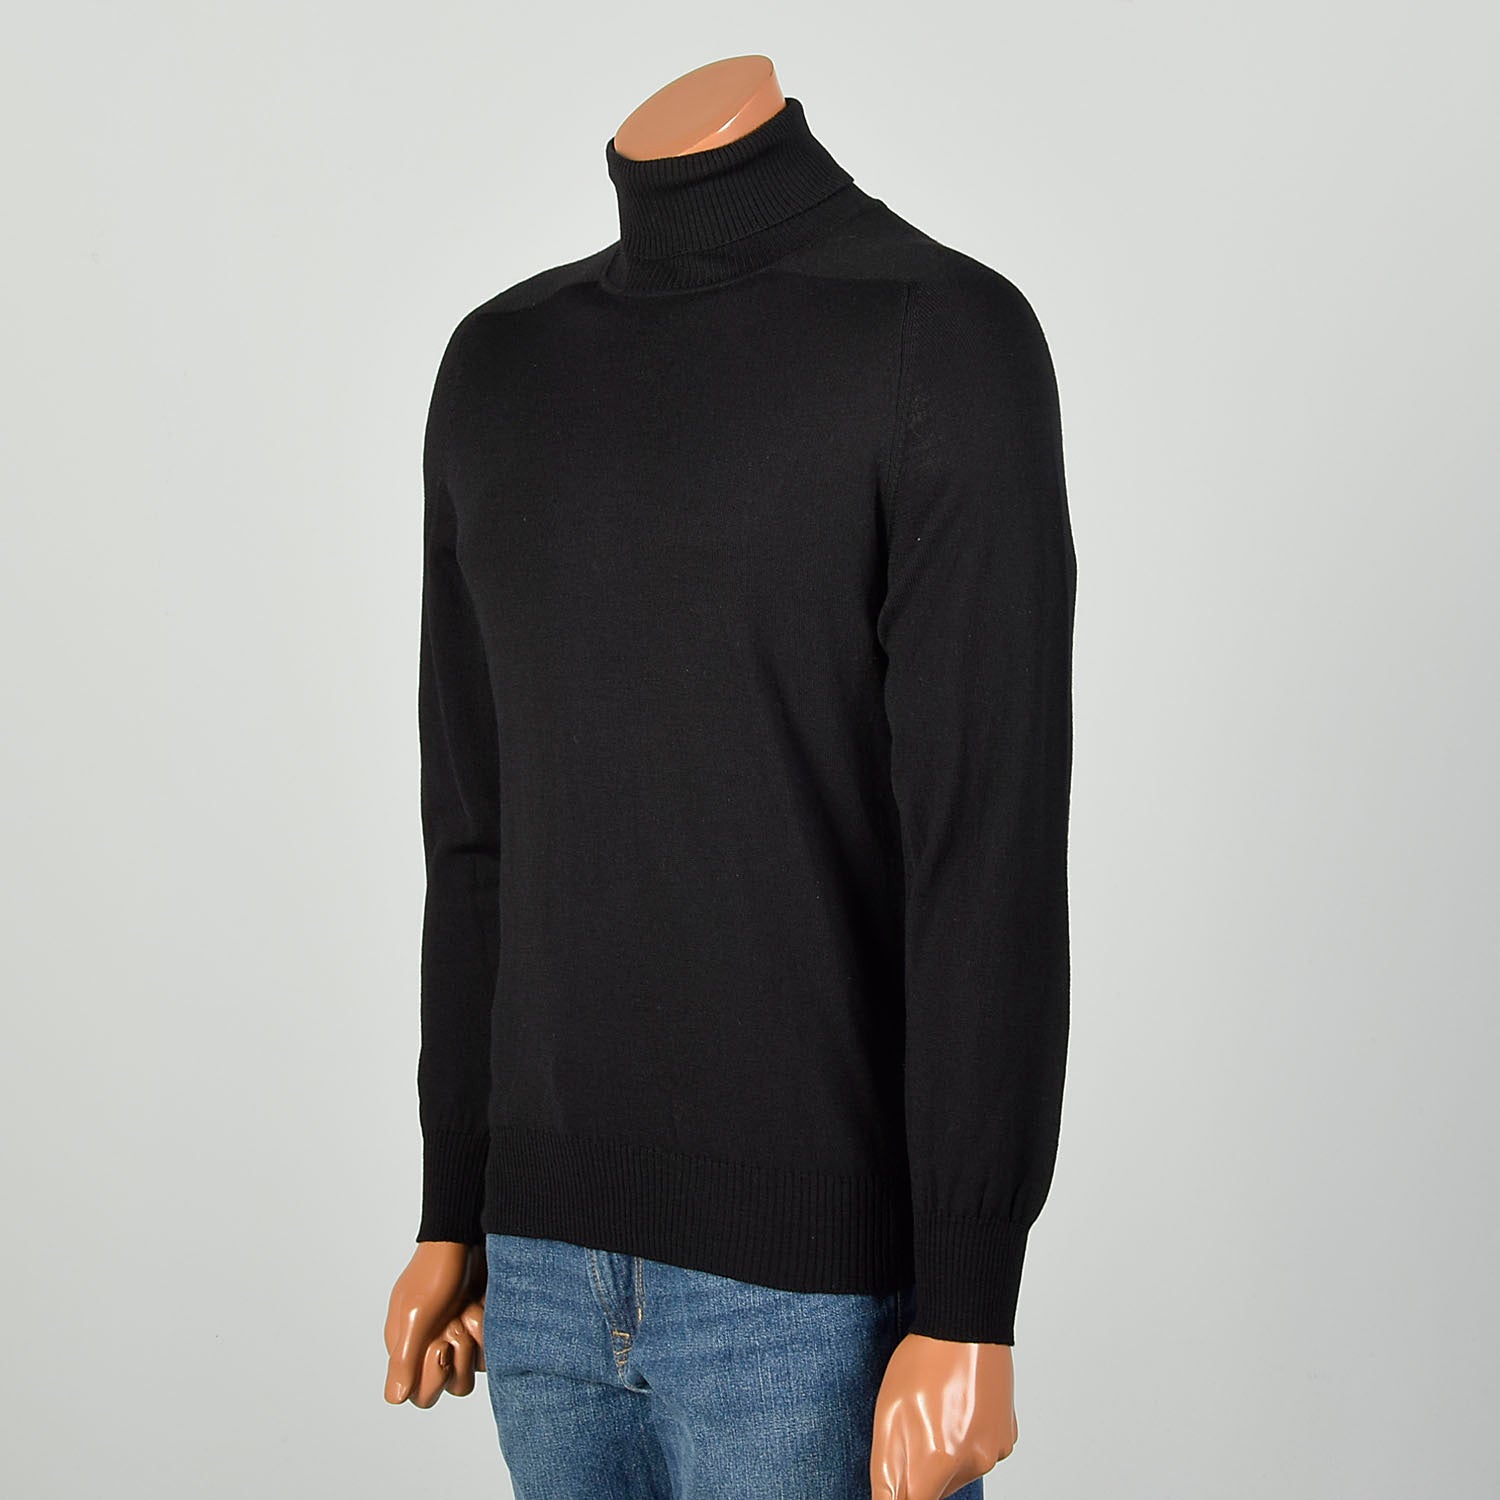 Large 1970s Pierre Cardin Classic Turtleneck Black Designer Ribbed Knit